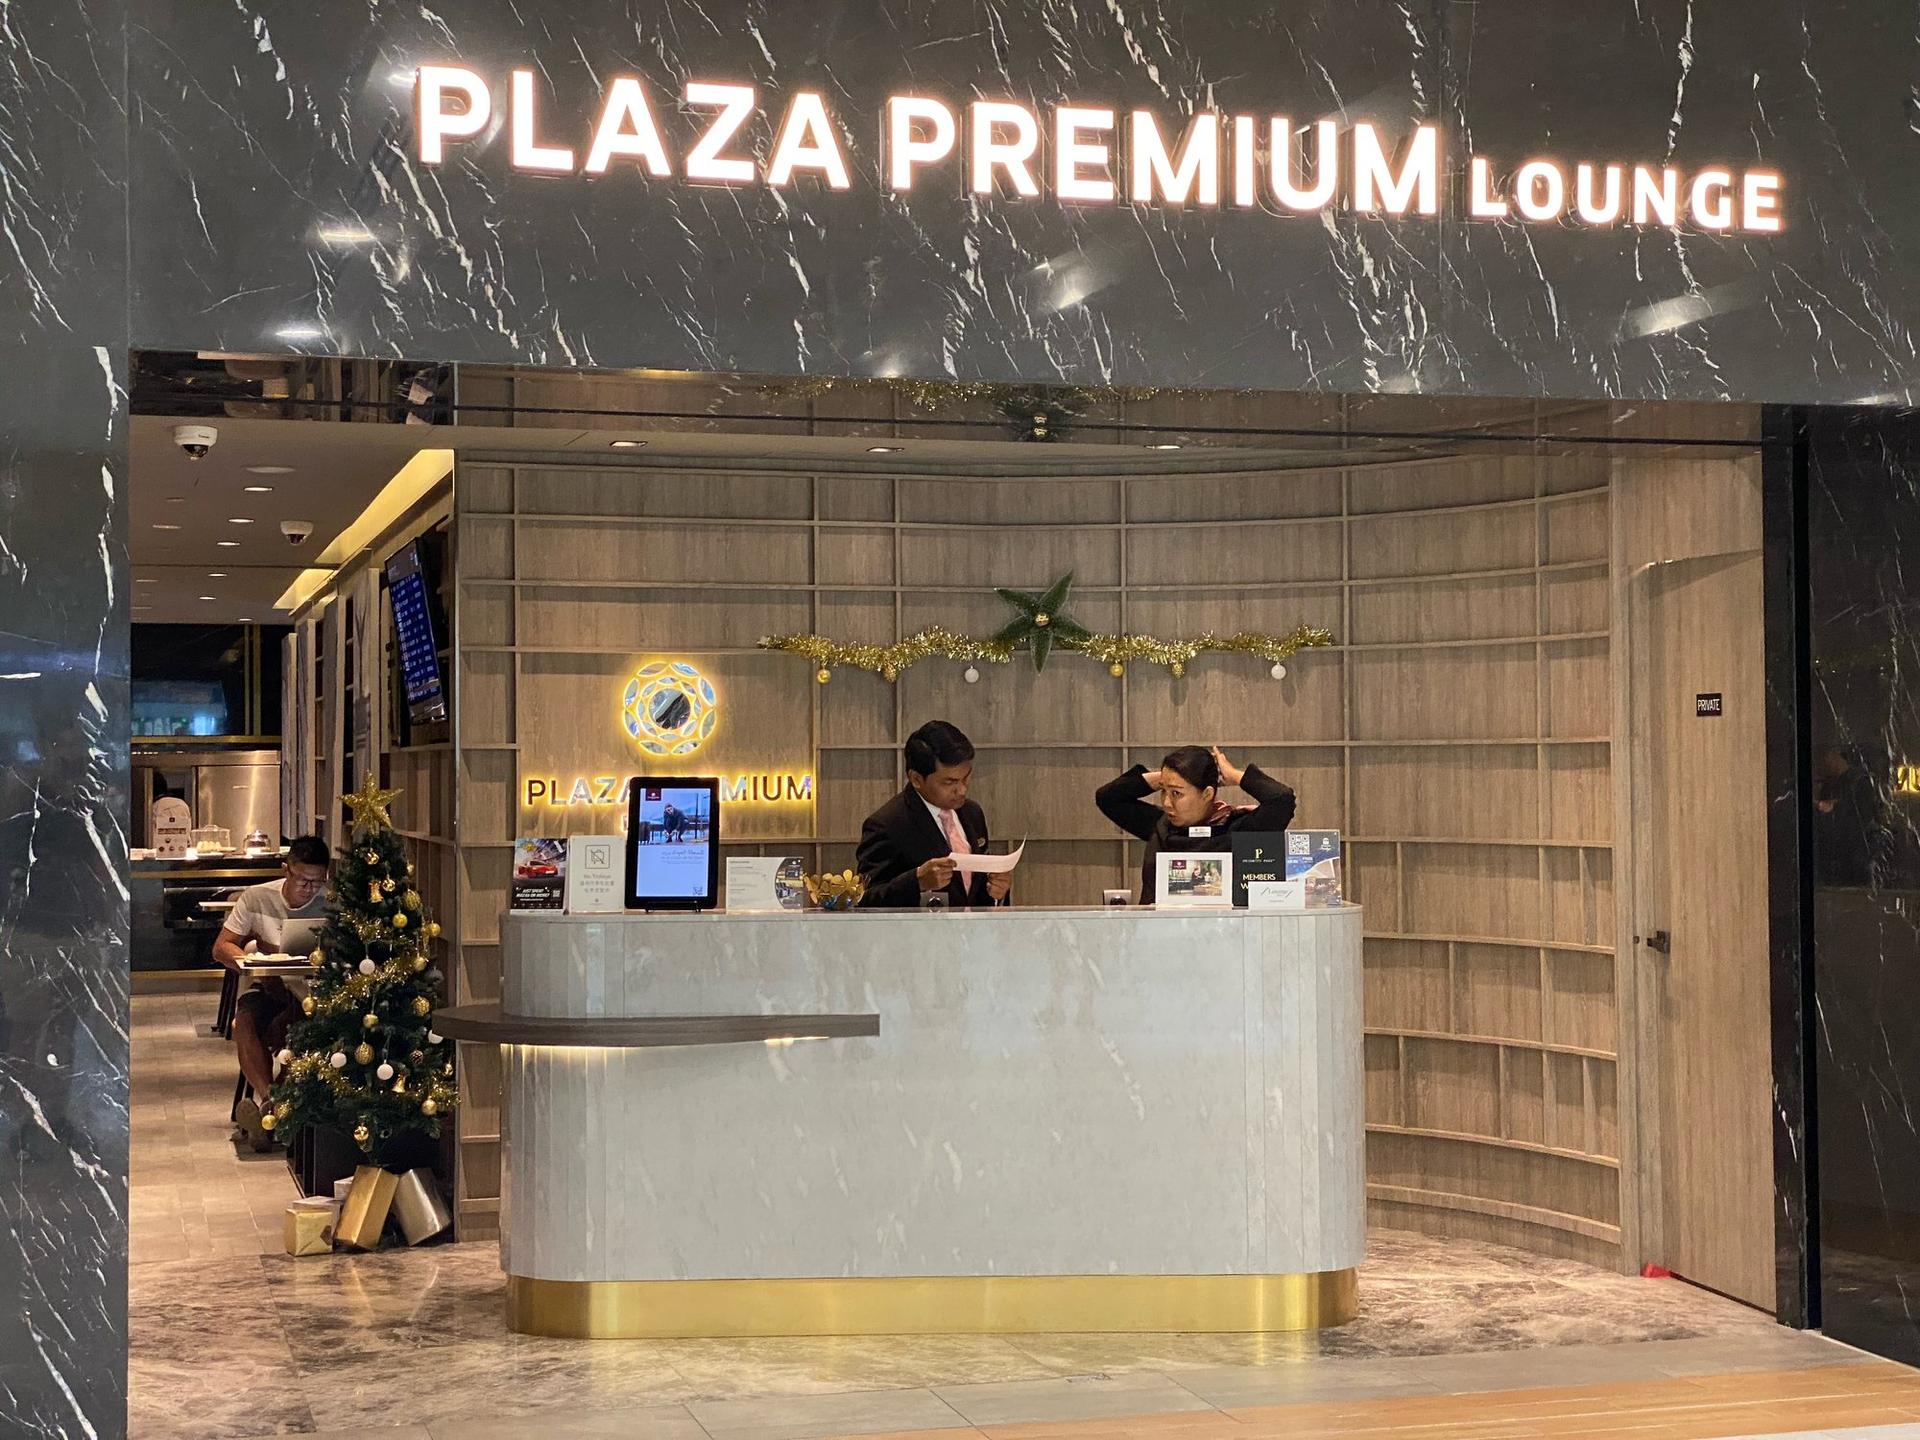 Plaza Premium Lounge image 13 of 26